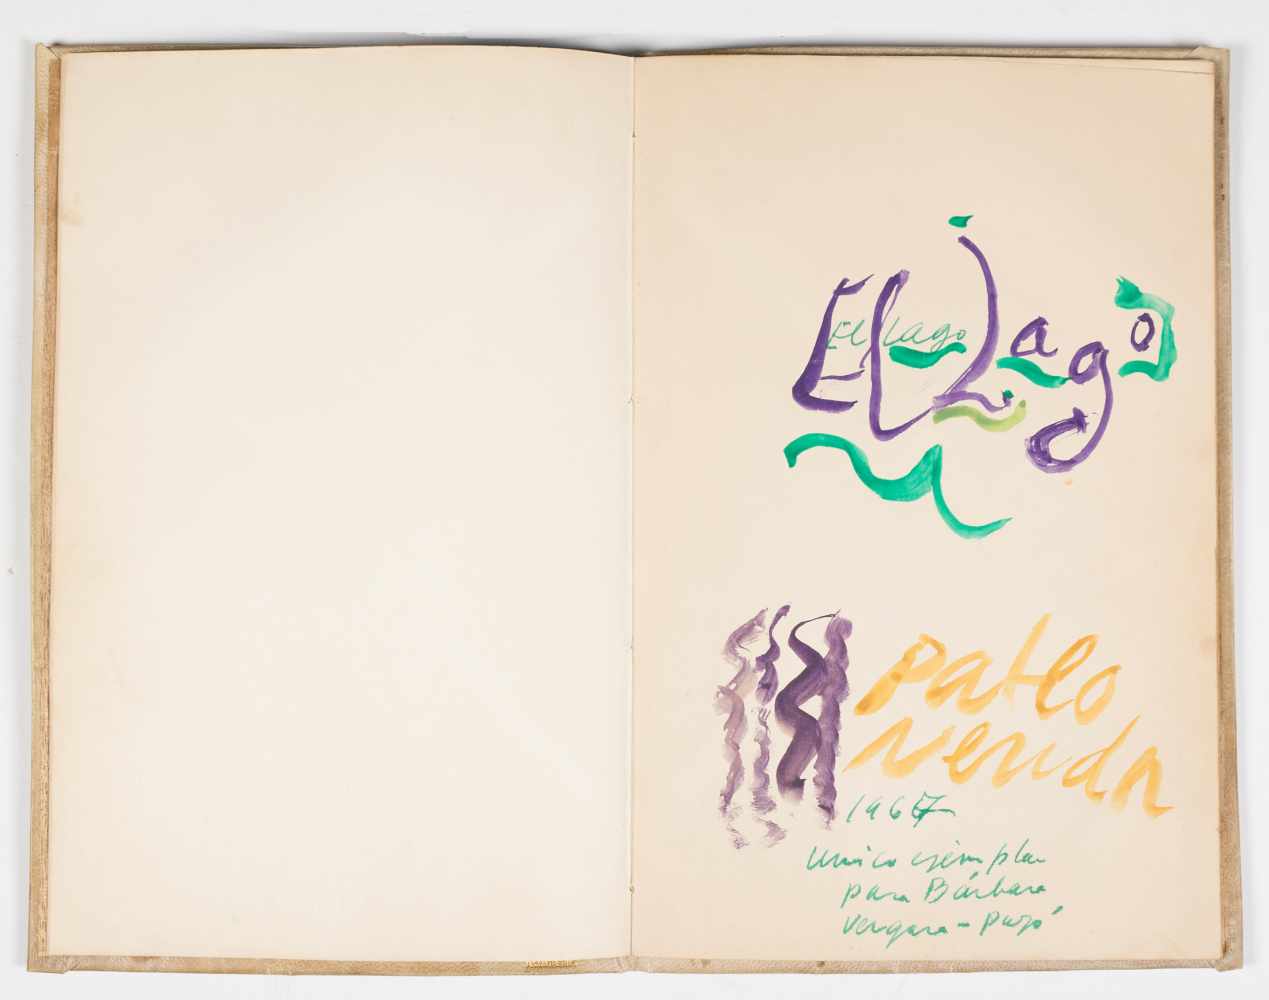 Neruda, Pablo. " El lago". Handwritten poem. 1966. 31 x 20 cm. Original version of a poem included